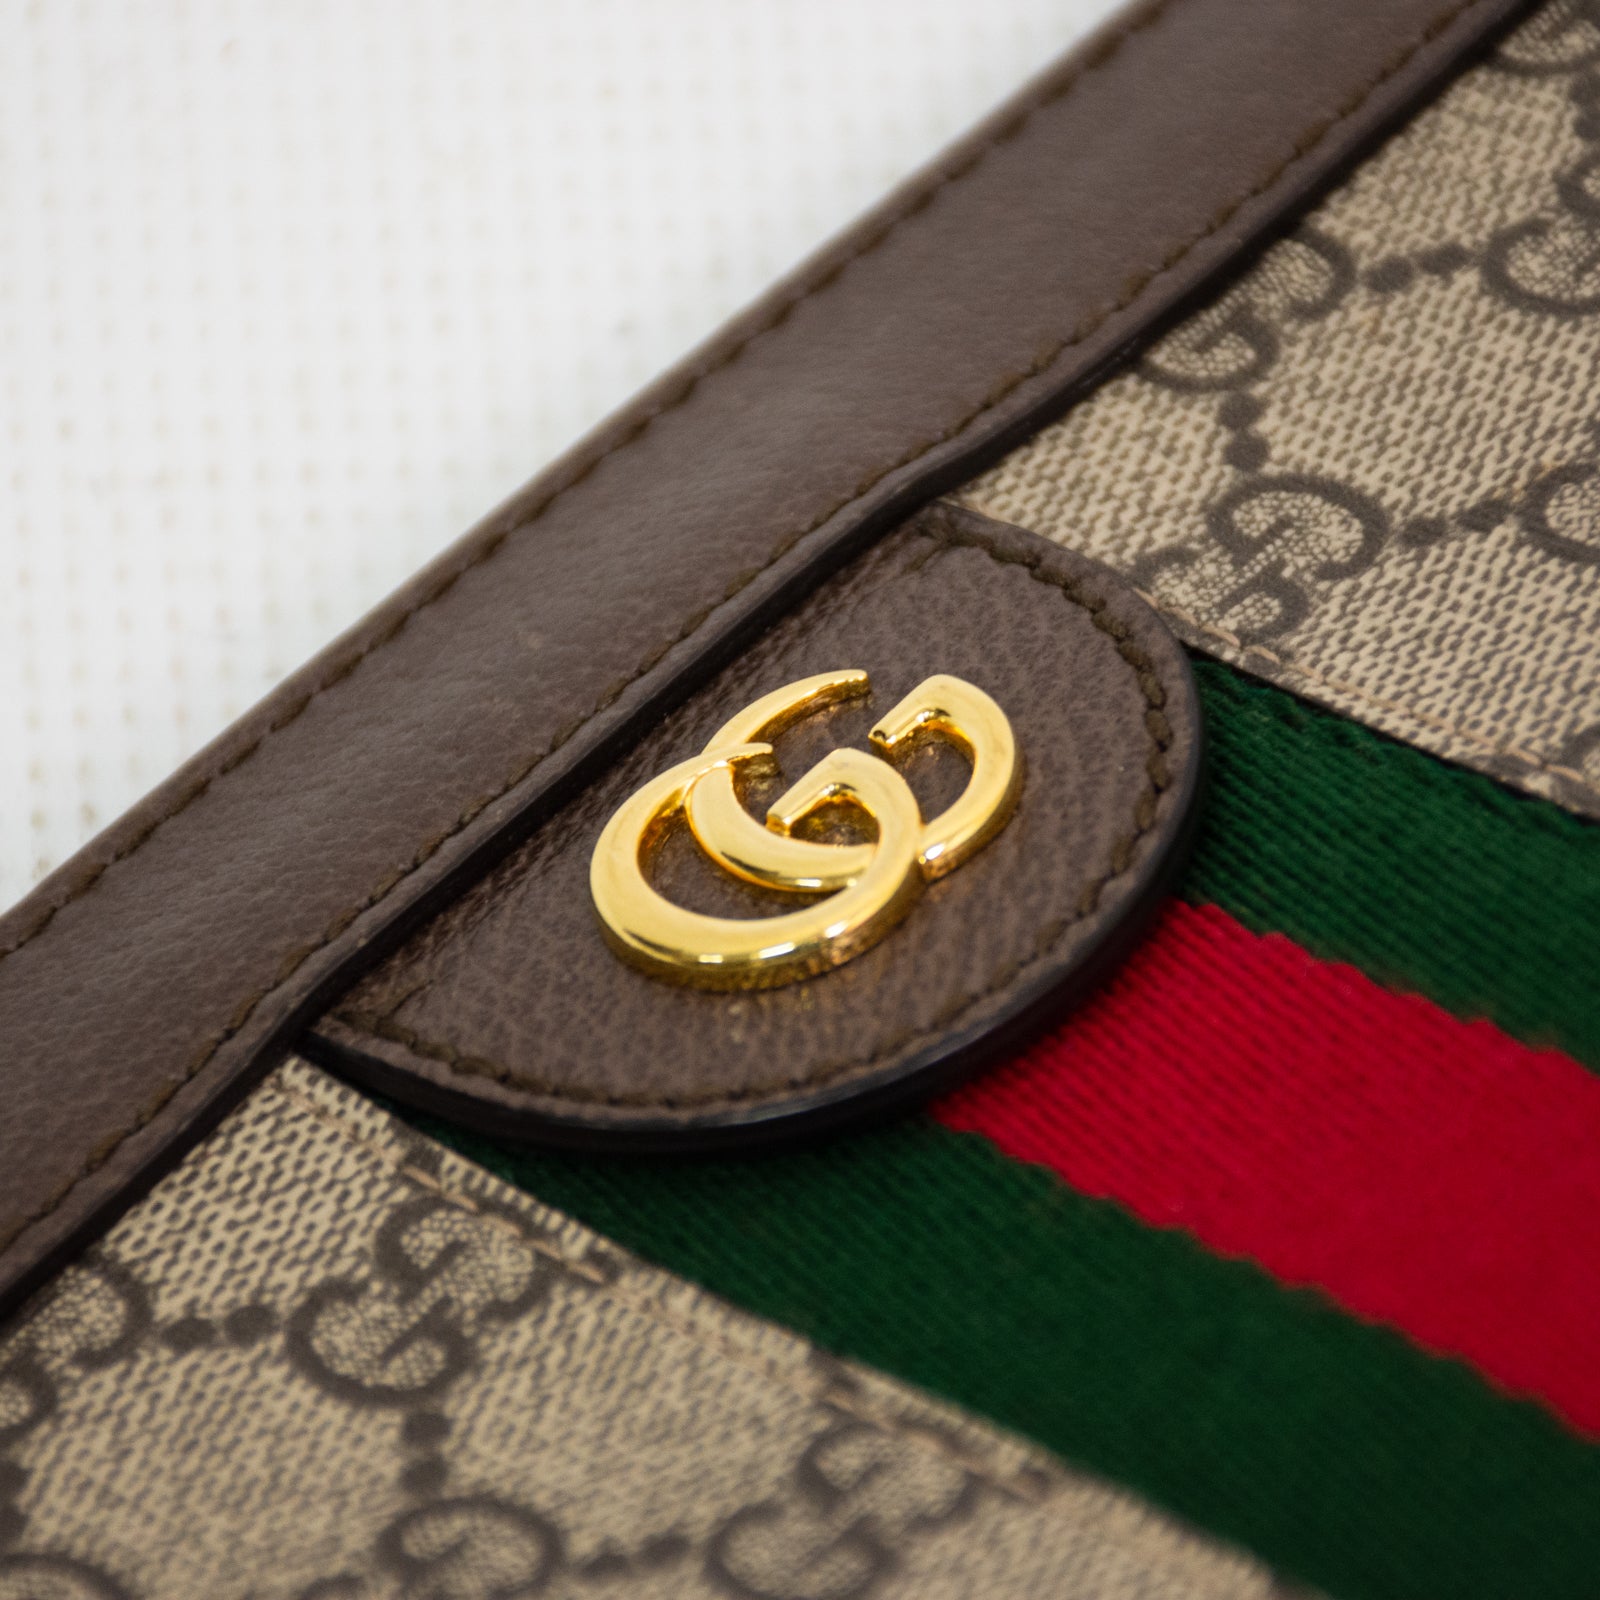 Gucci GG Supreme Ophidia Chain-Strap Shoulder Bag - 503877